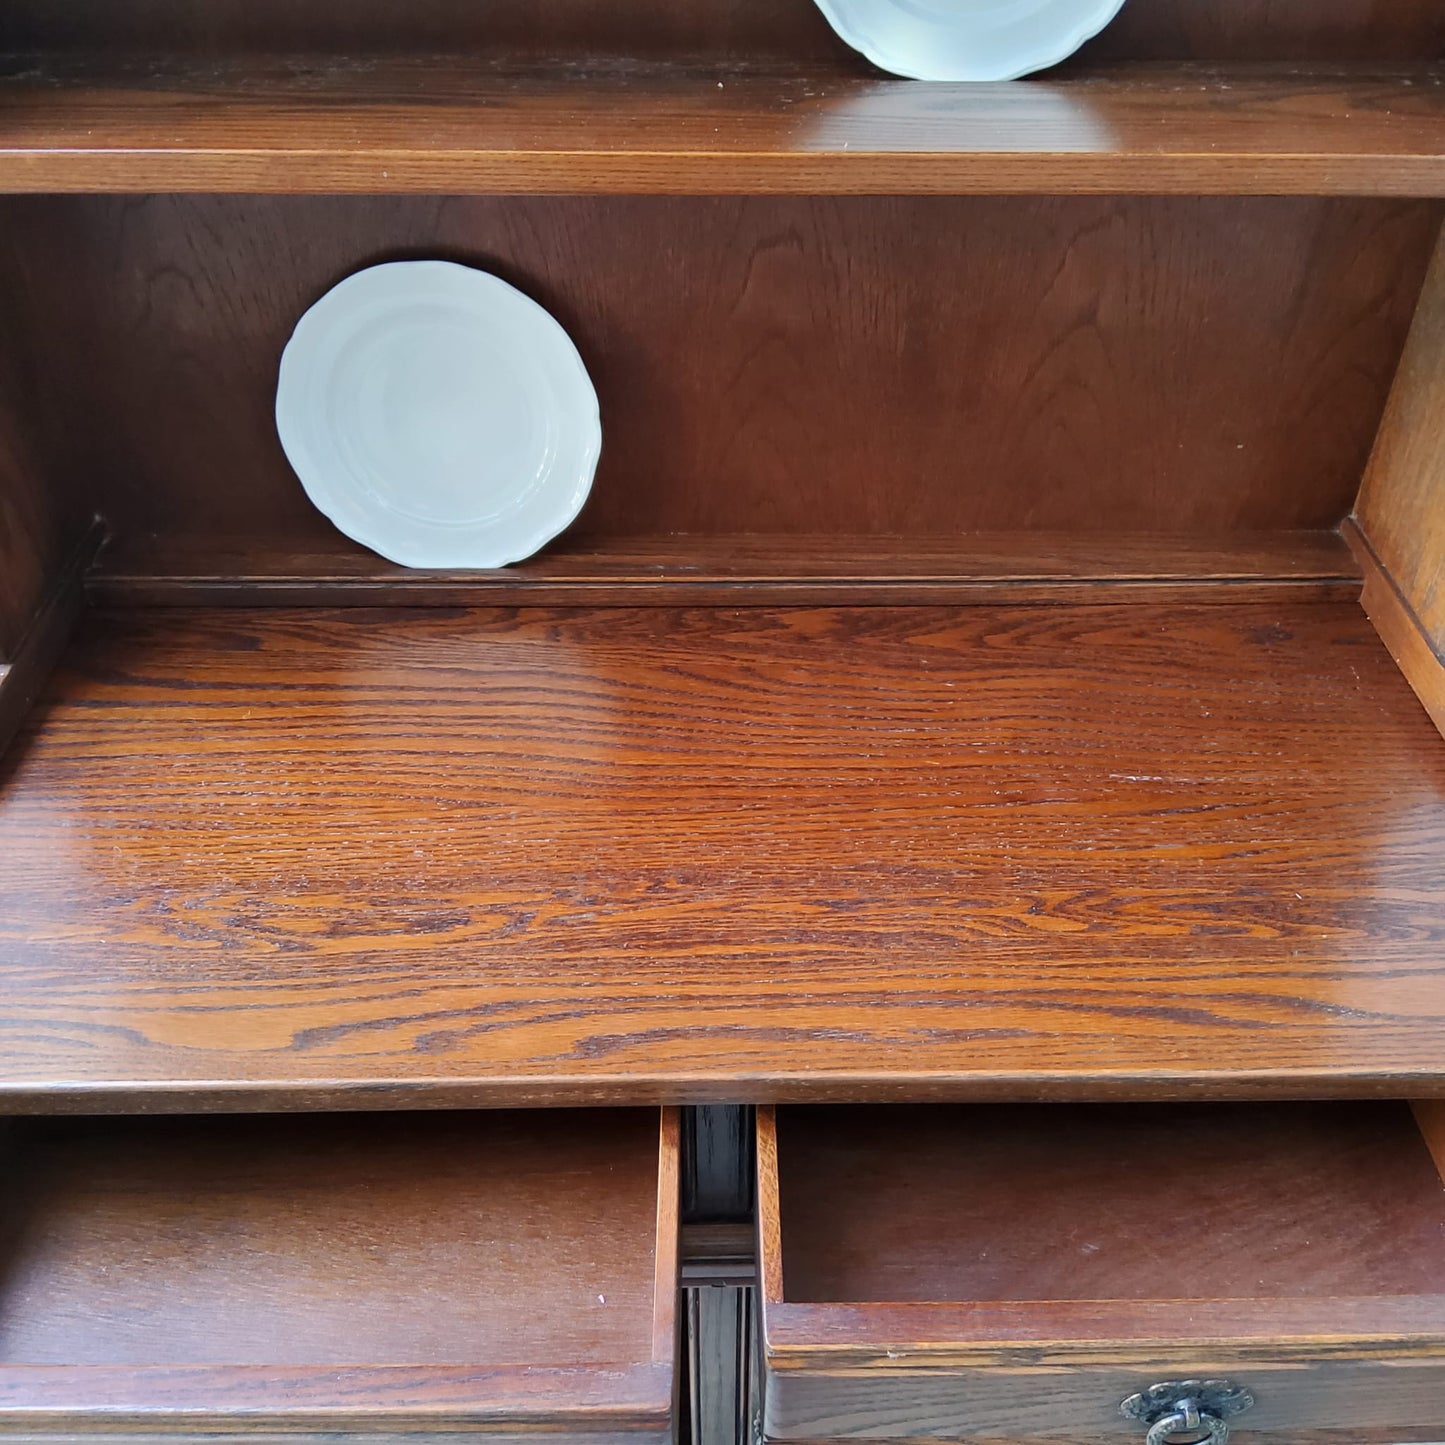 Oak Small Dresser by Old Charm